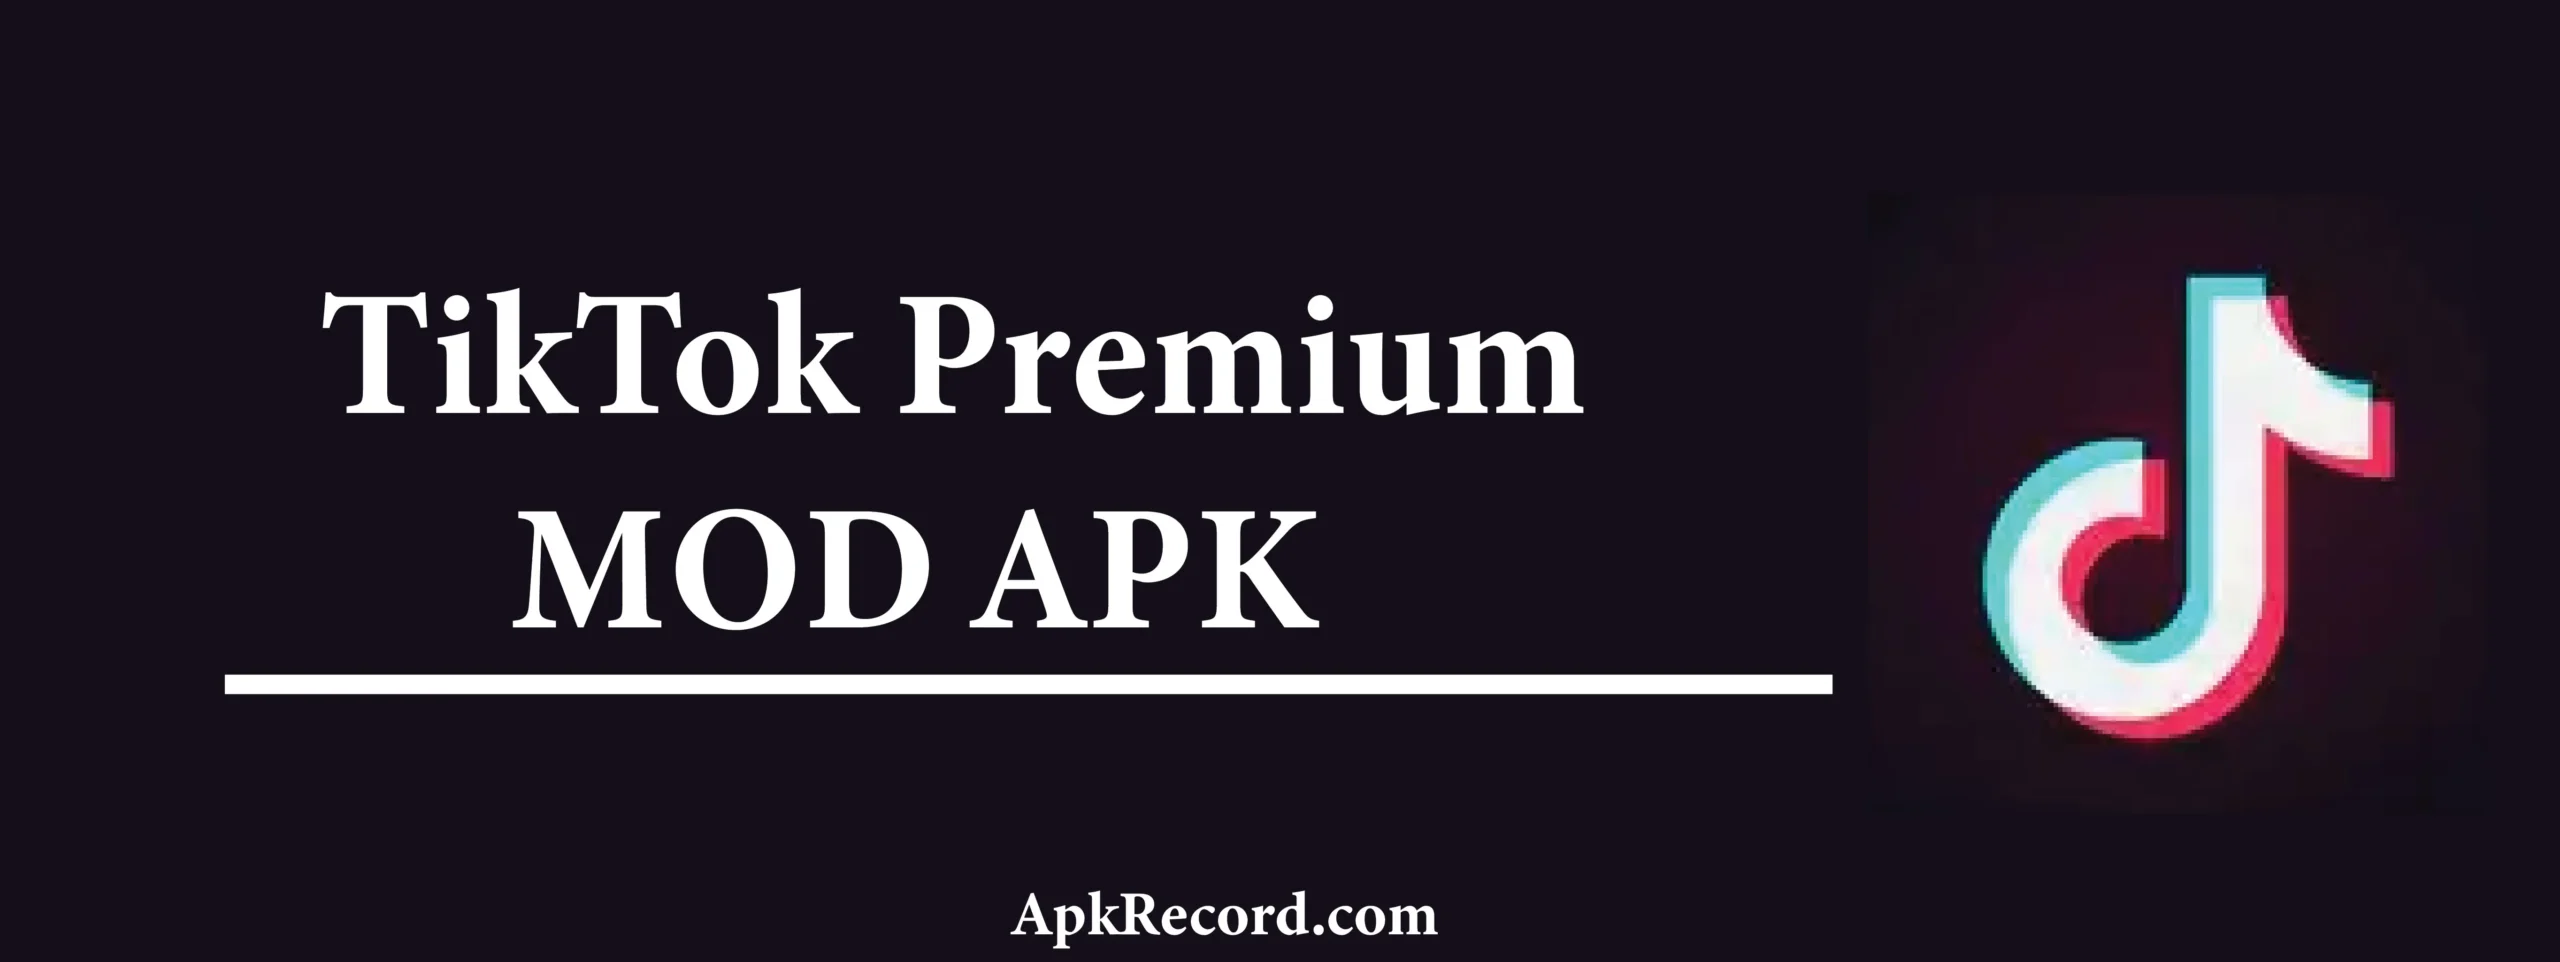 TikTok Premium MOD APK V33.1.4